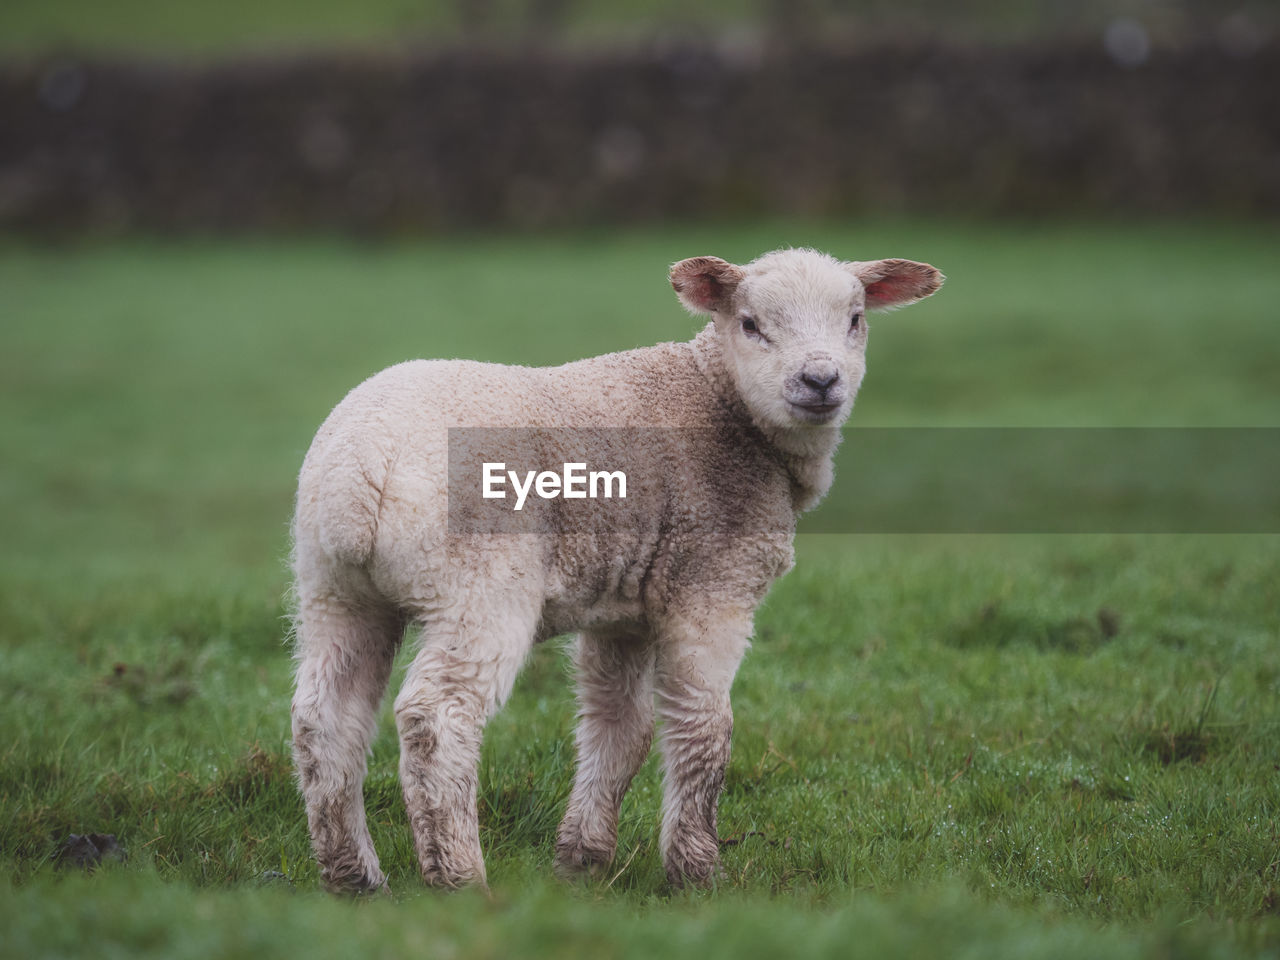 Lamb standing on grassy field